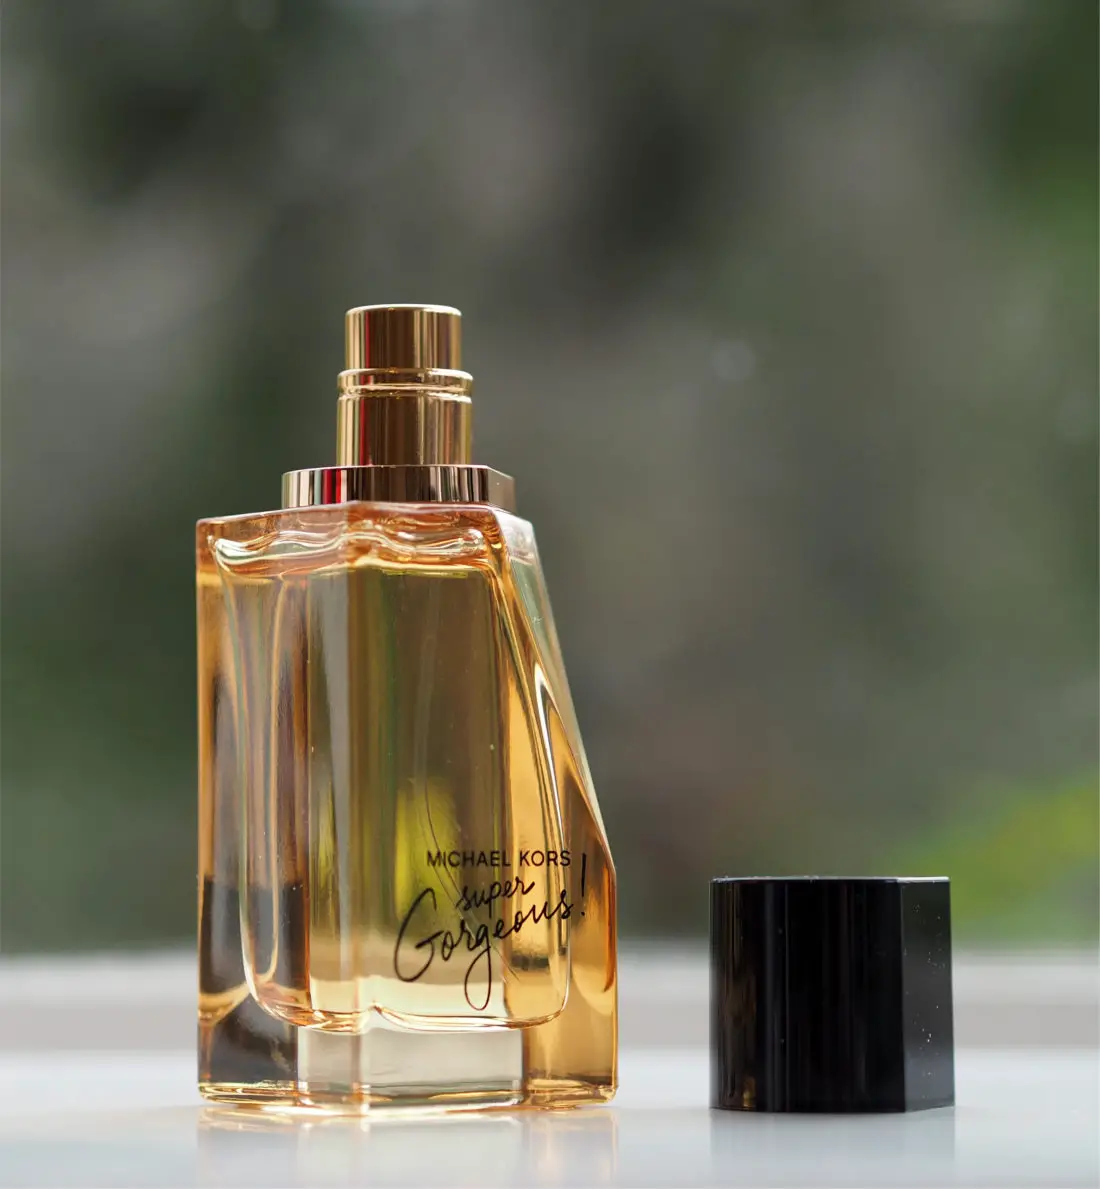 Michael Kors Gorgeous Eau De Parfum Spray 17 oz  50 ml For Women Sealed   eBay